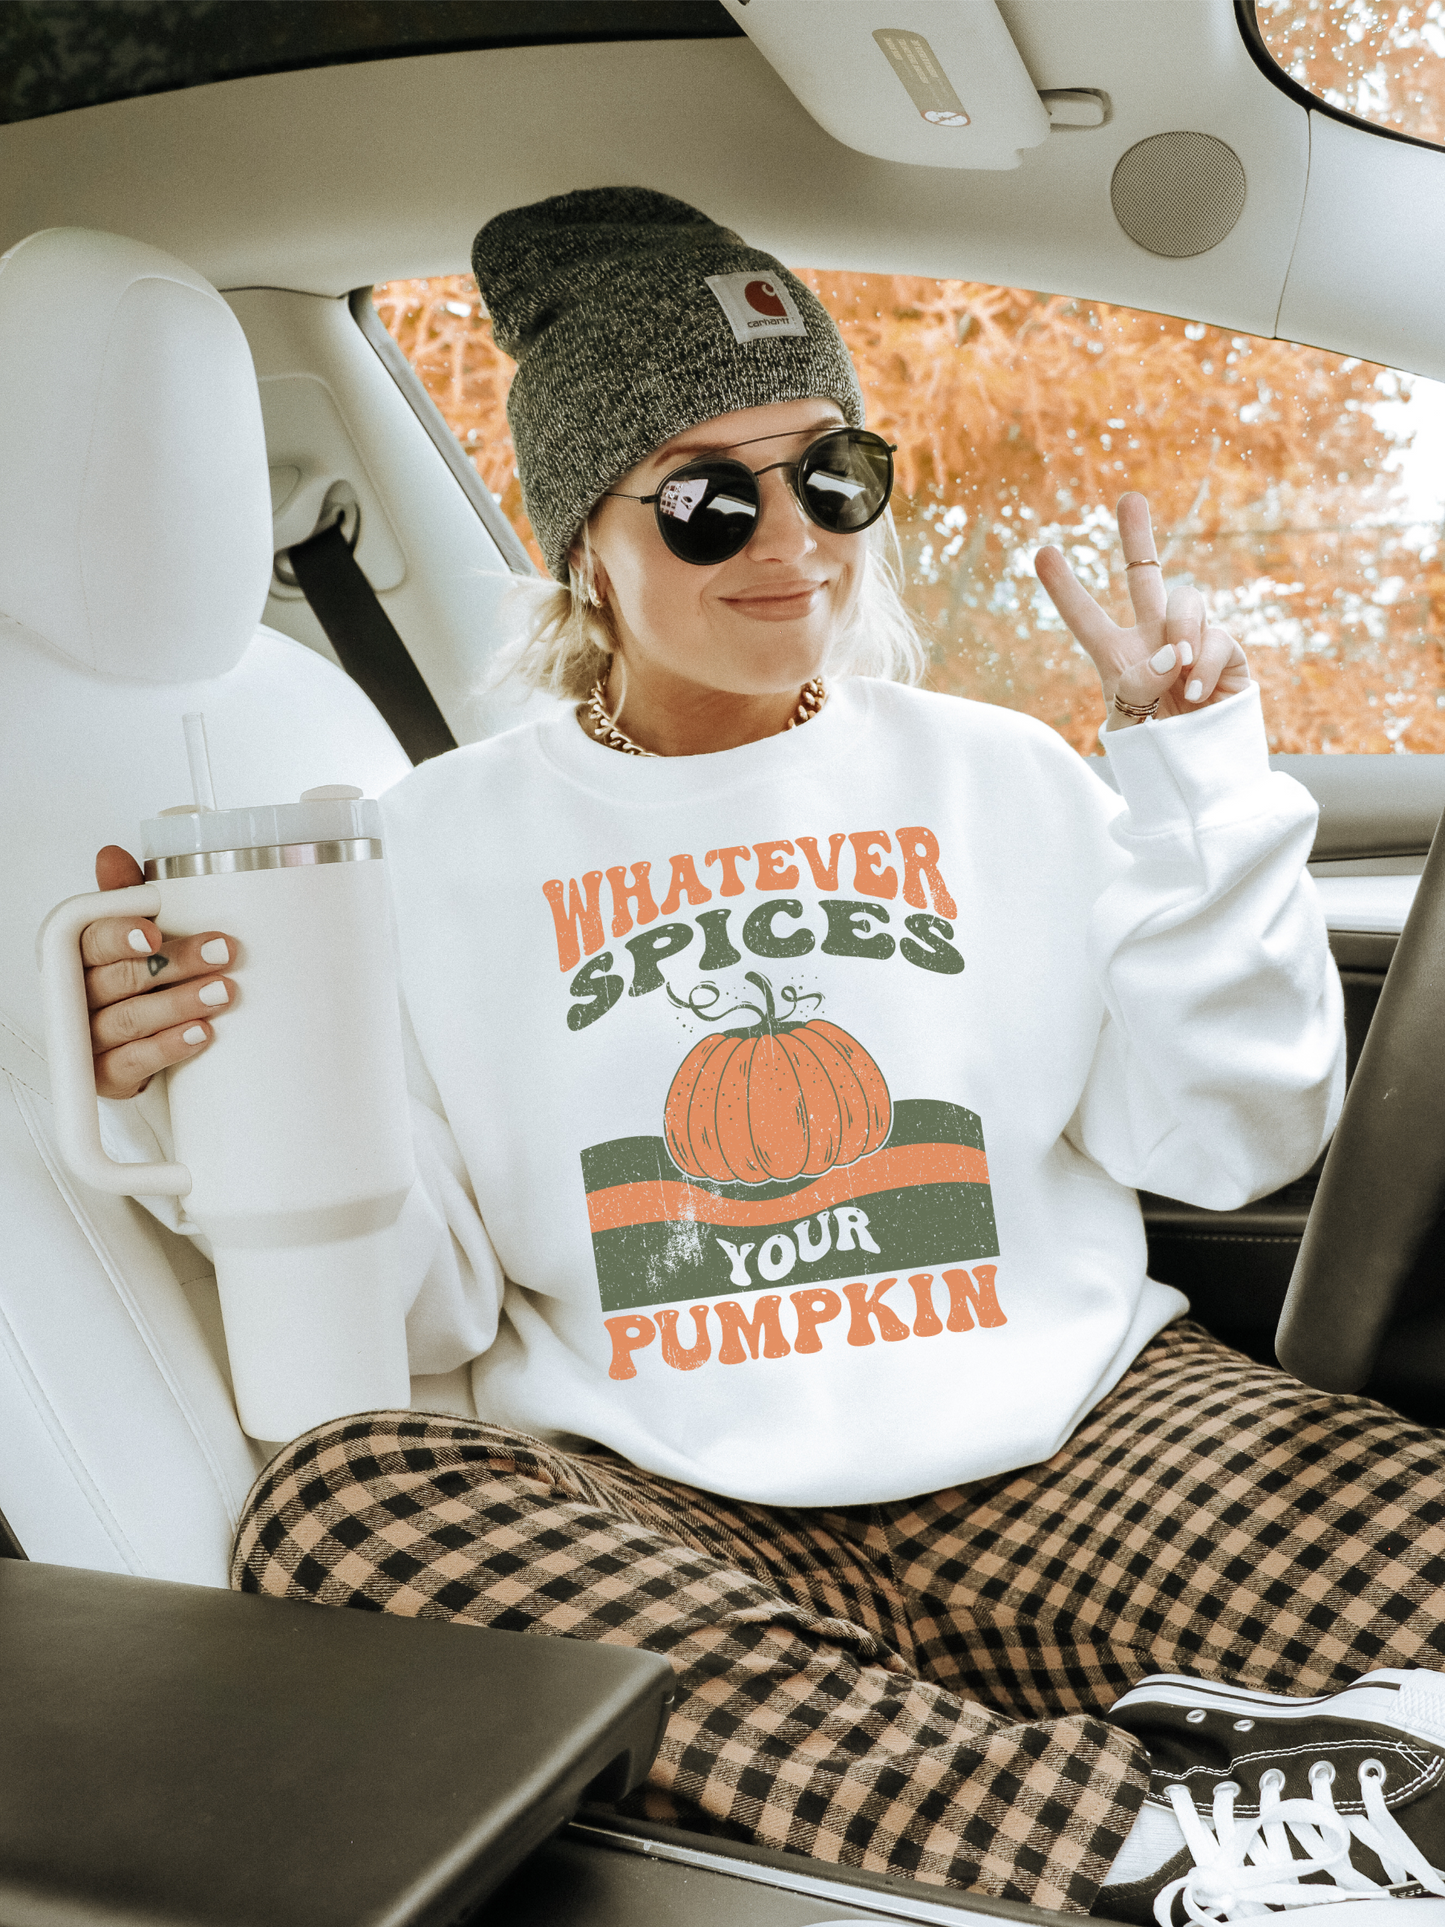 Whatever Spices Your Pumpkin Sweatshirt